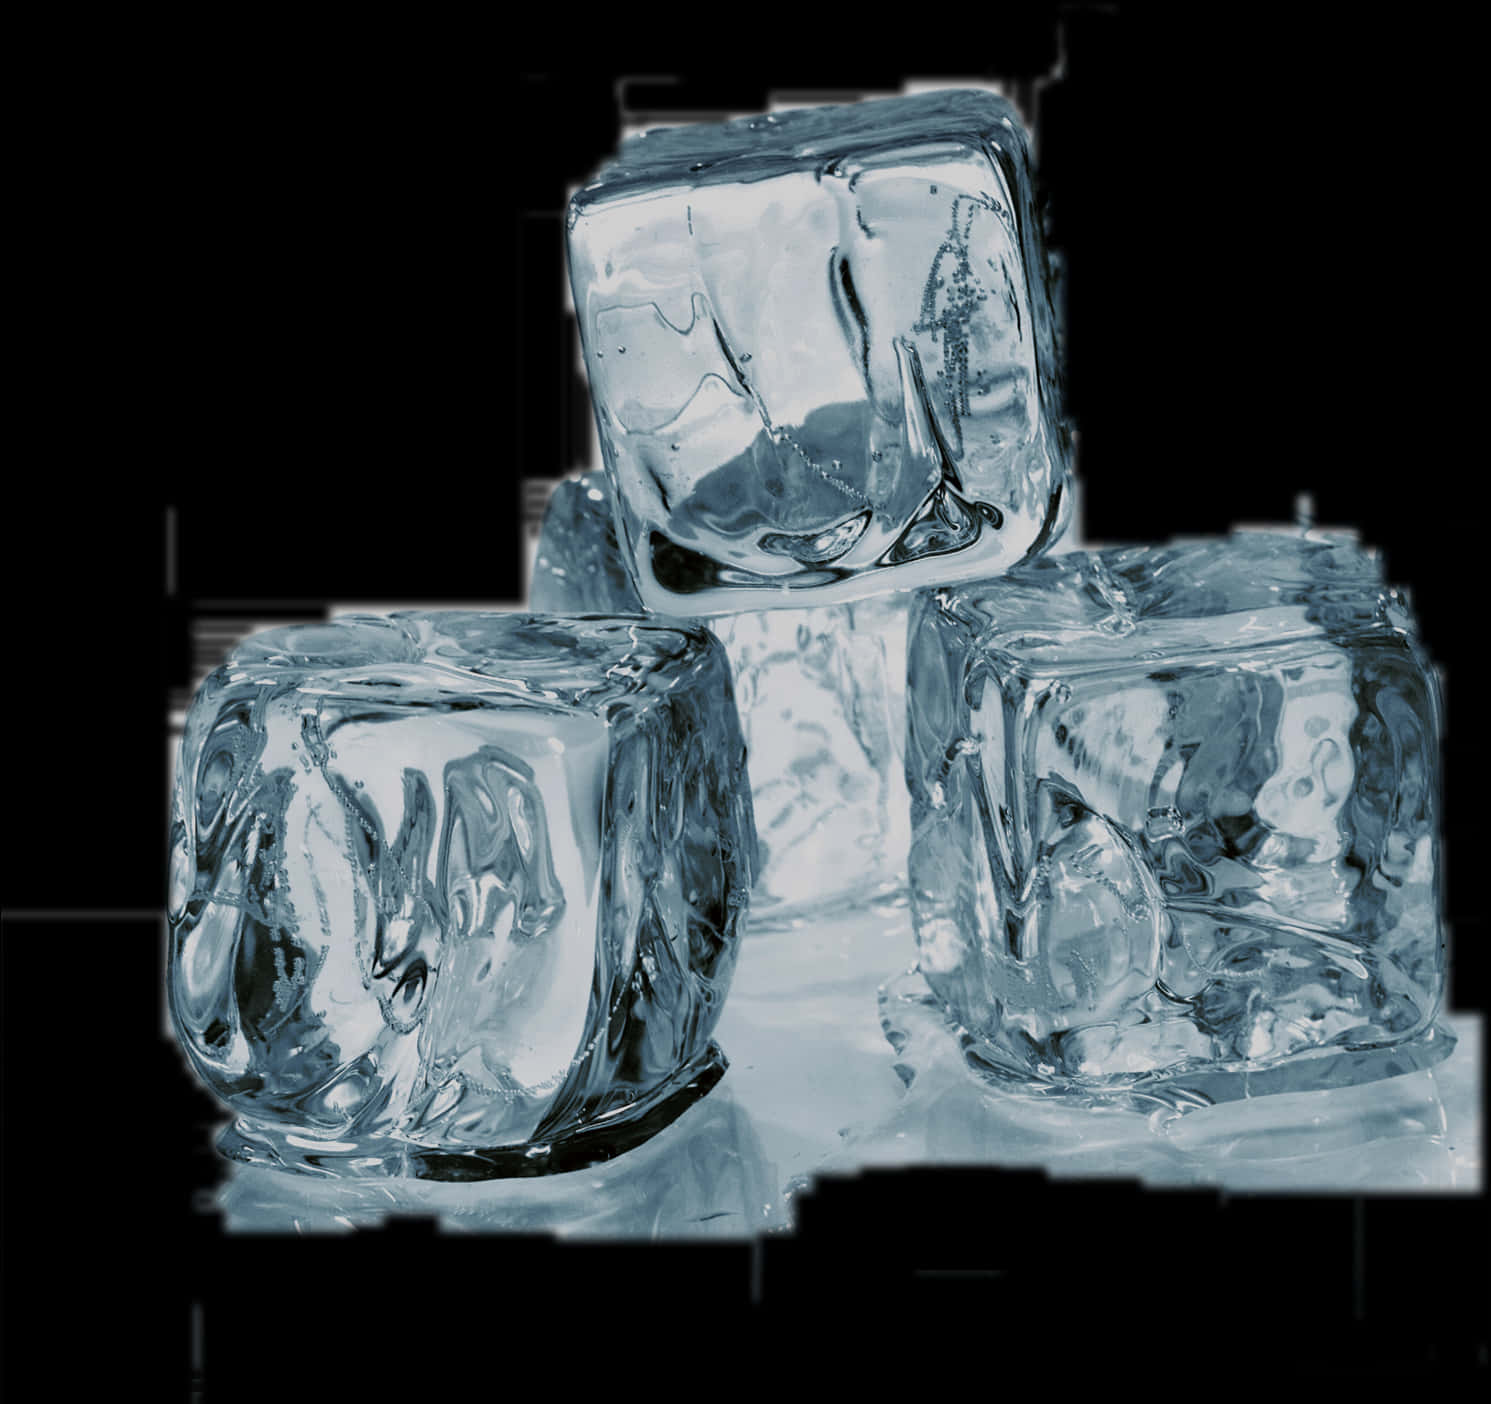 Four Ice Cubes Melting